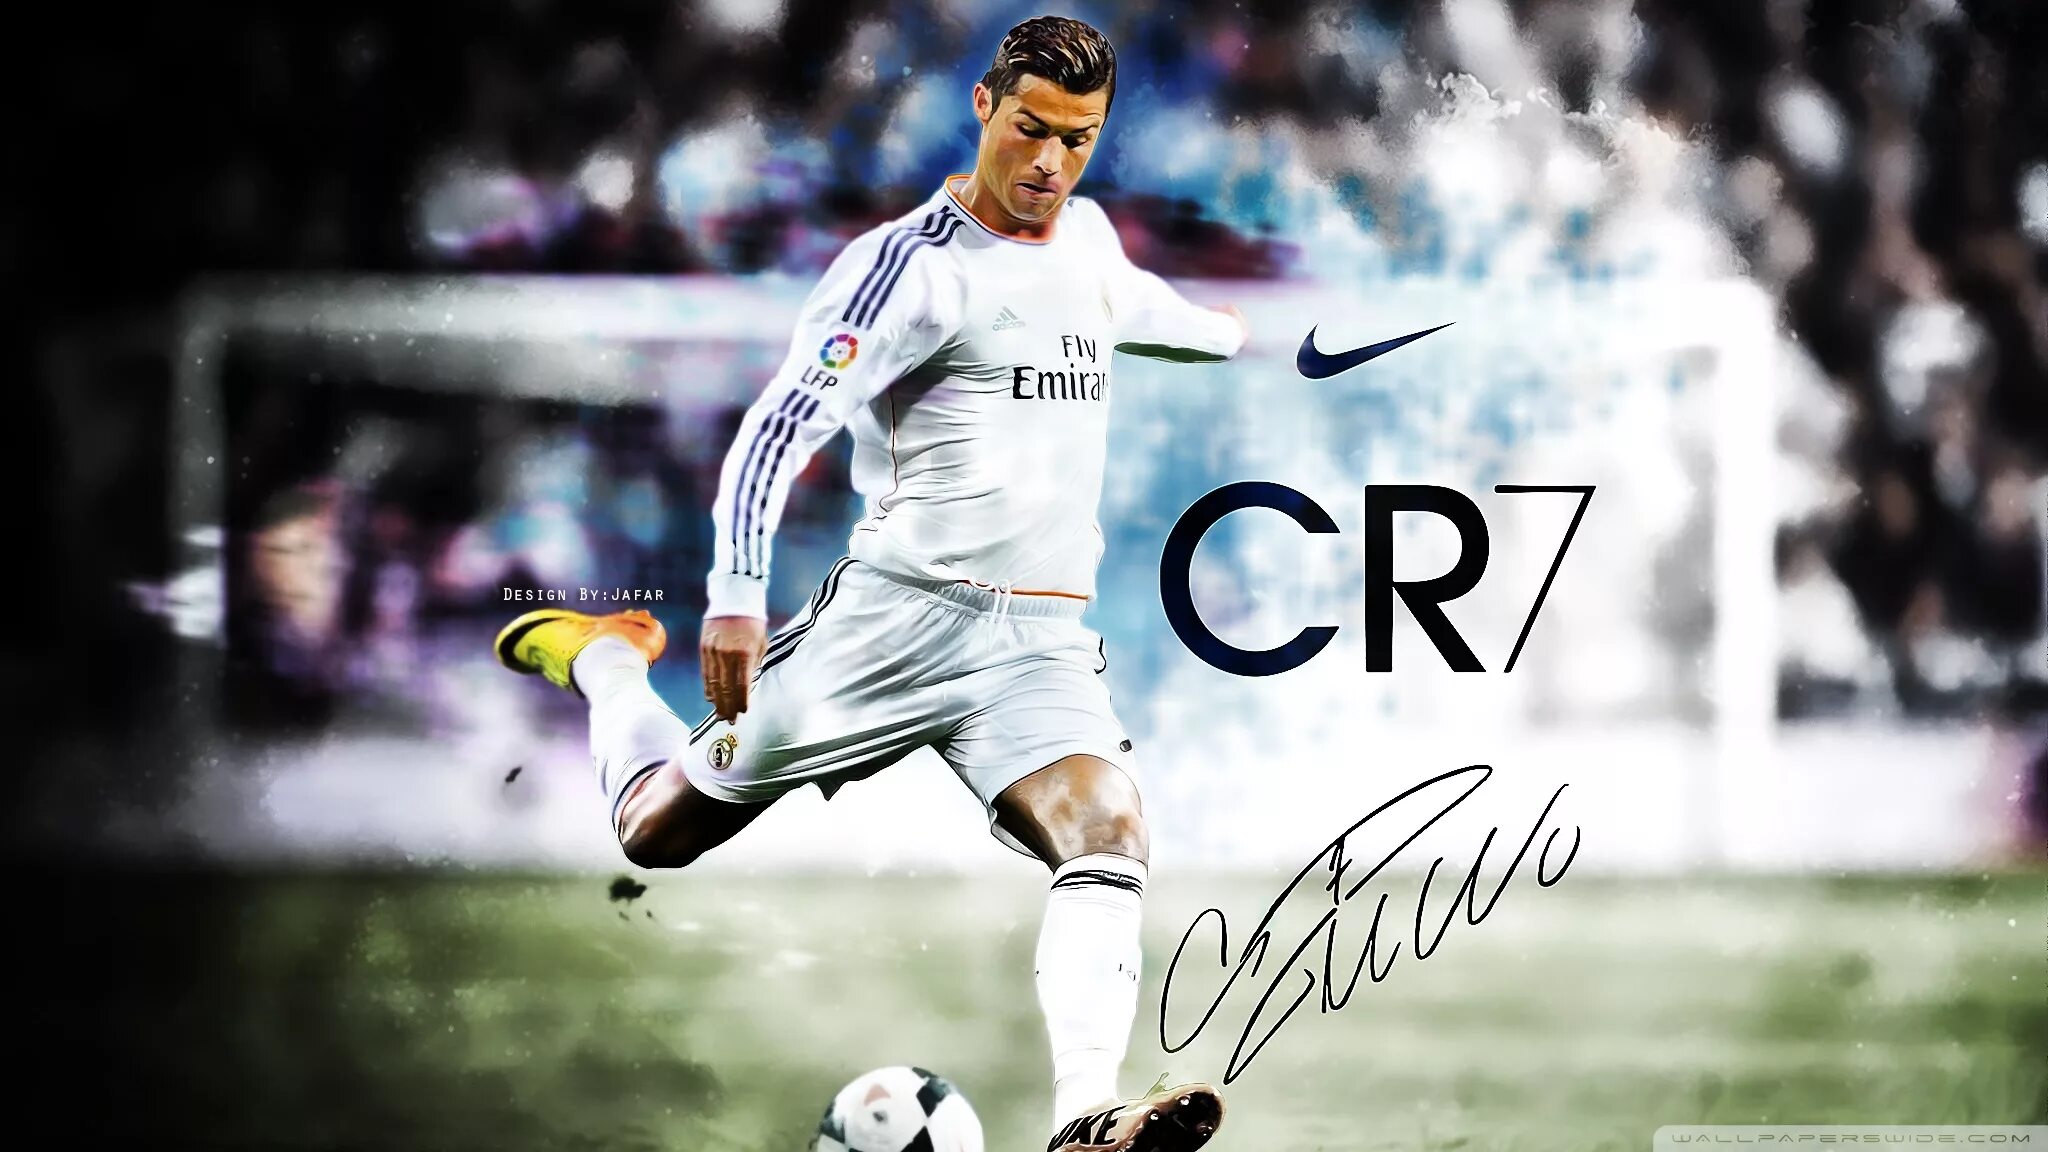 Роналдо 7. Ronaldo cr7. Cr7 Cristiano Ronaldo. Криштиану Роналду 2015.